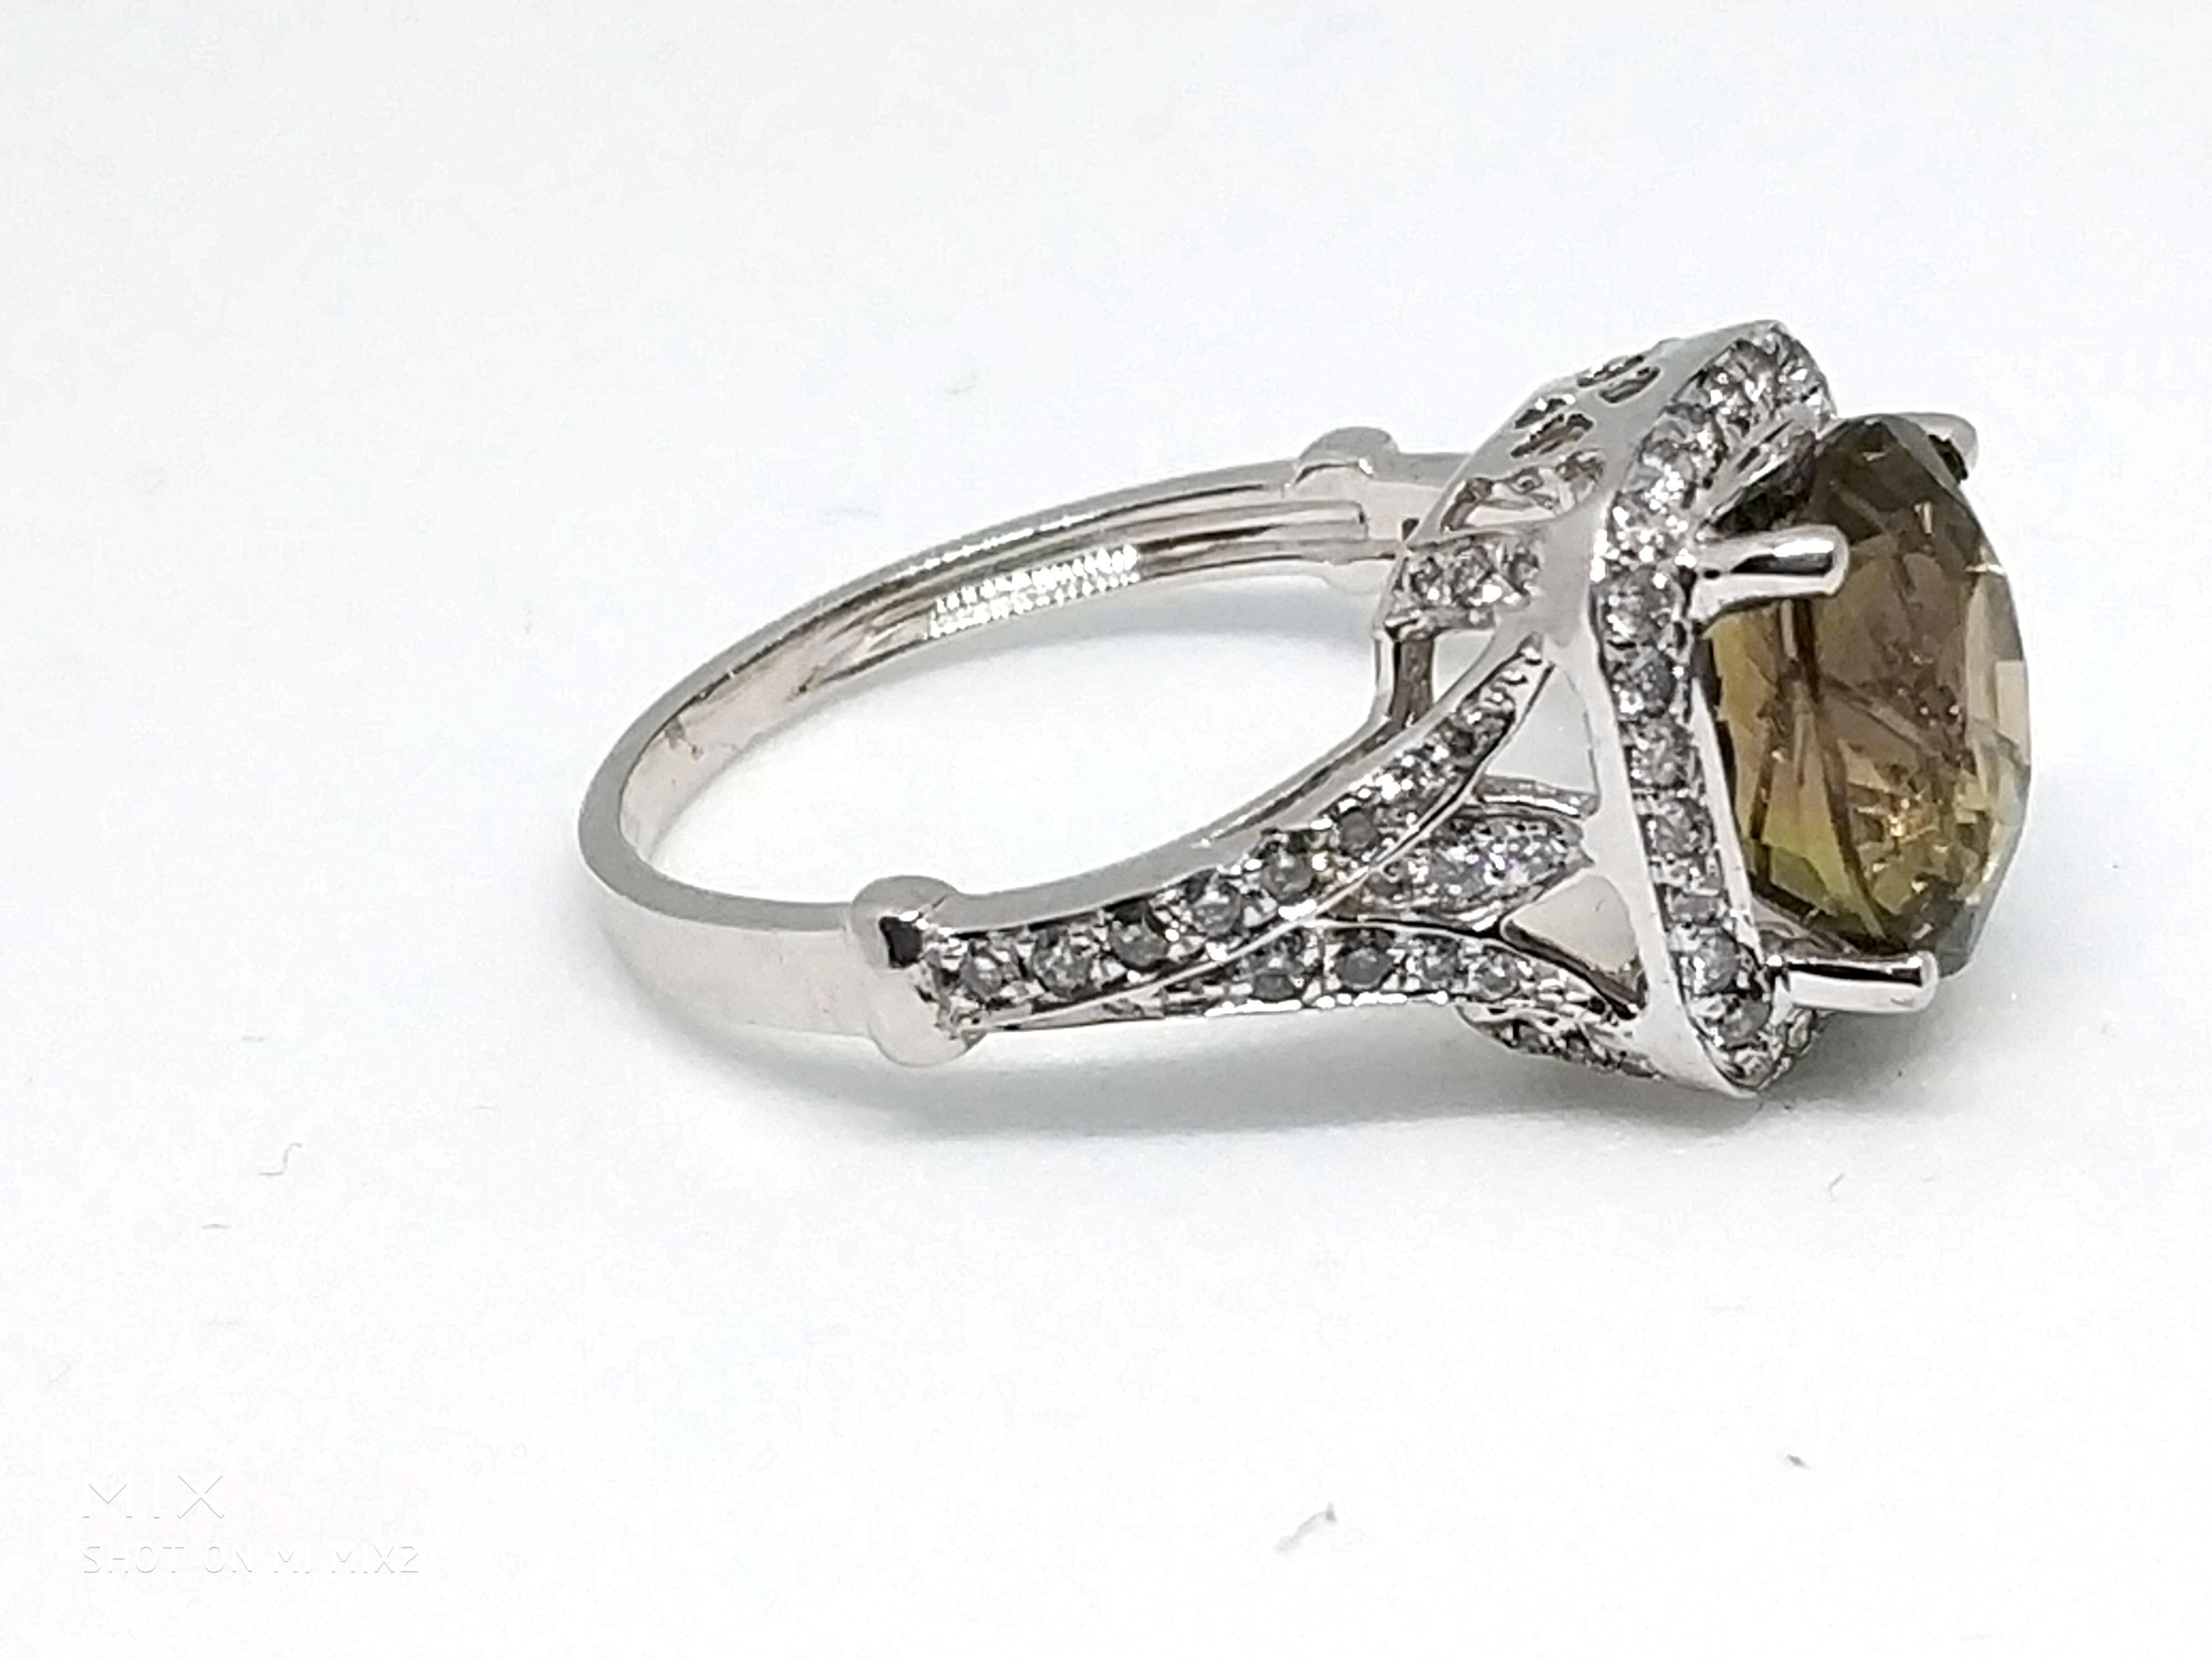 1.5 carat diamond ring